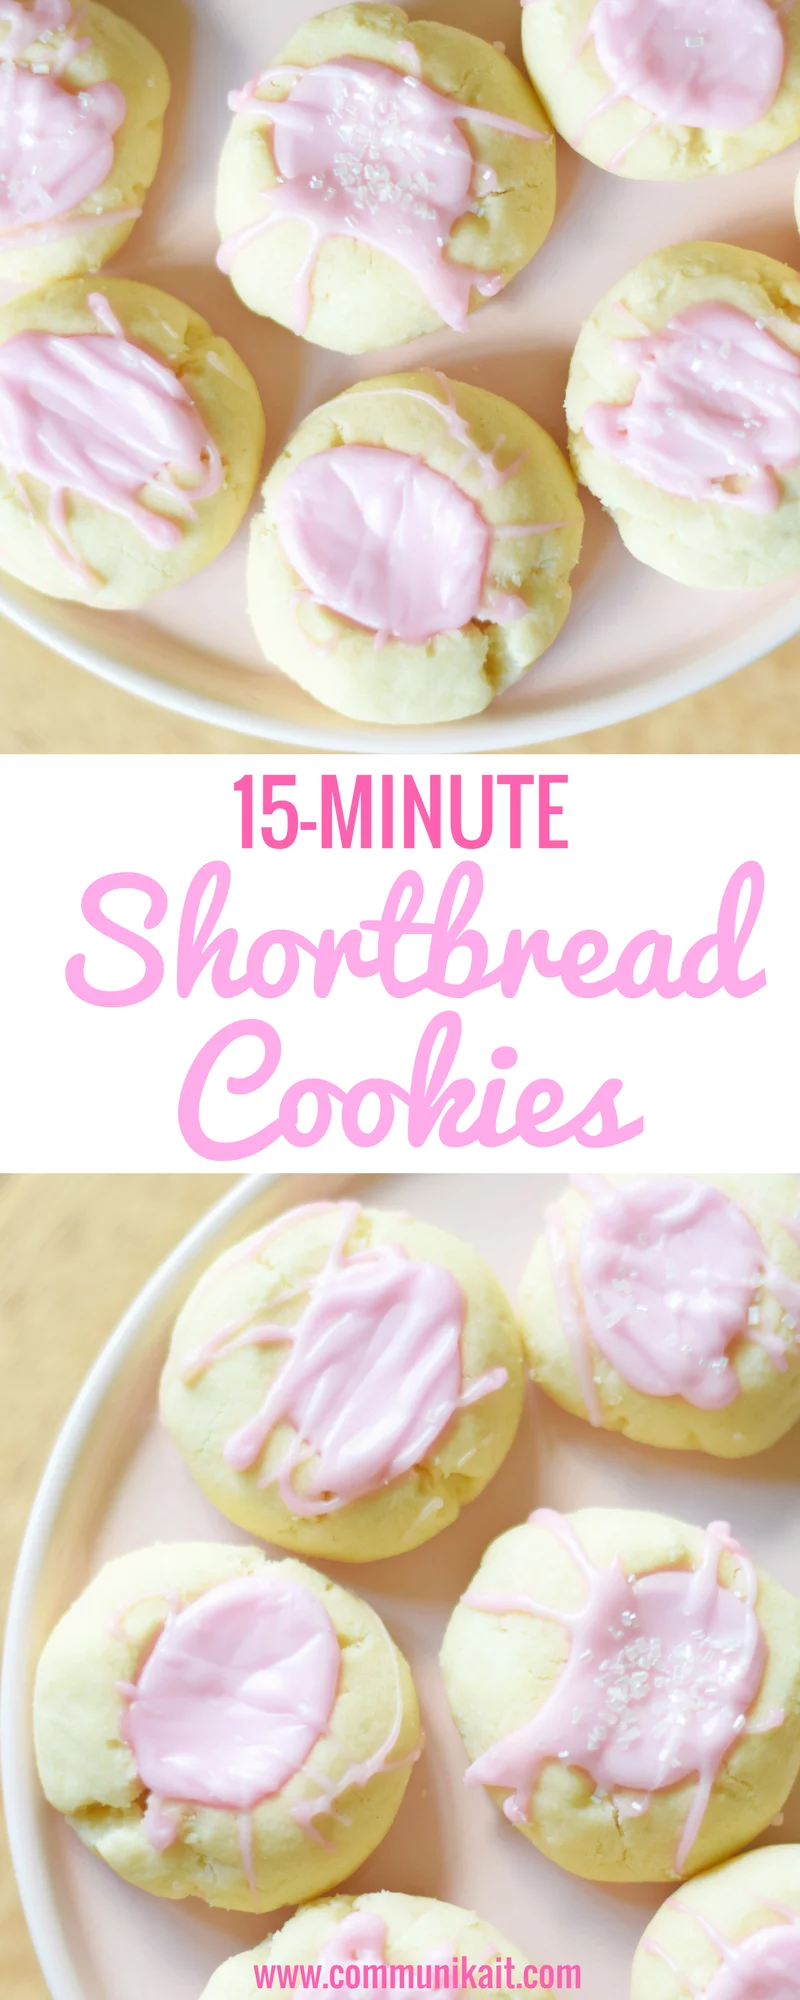 15-Minute Shortbread Cookies - Easy Shortbread Recipe - Thumbprint Shortbread Recipe - Shortbread Bites - Easy Cookie Recipe - Fast Cookie Recipe - Gluten Free Cookie - Communikait by Kait Hanson